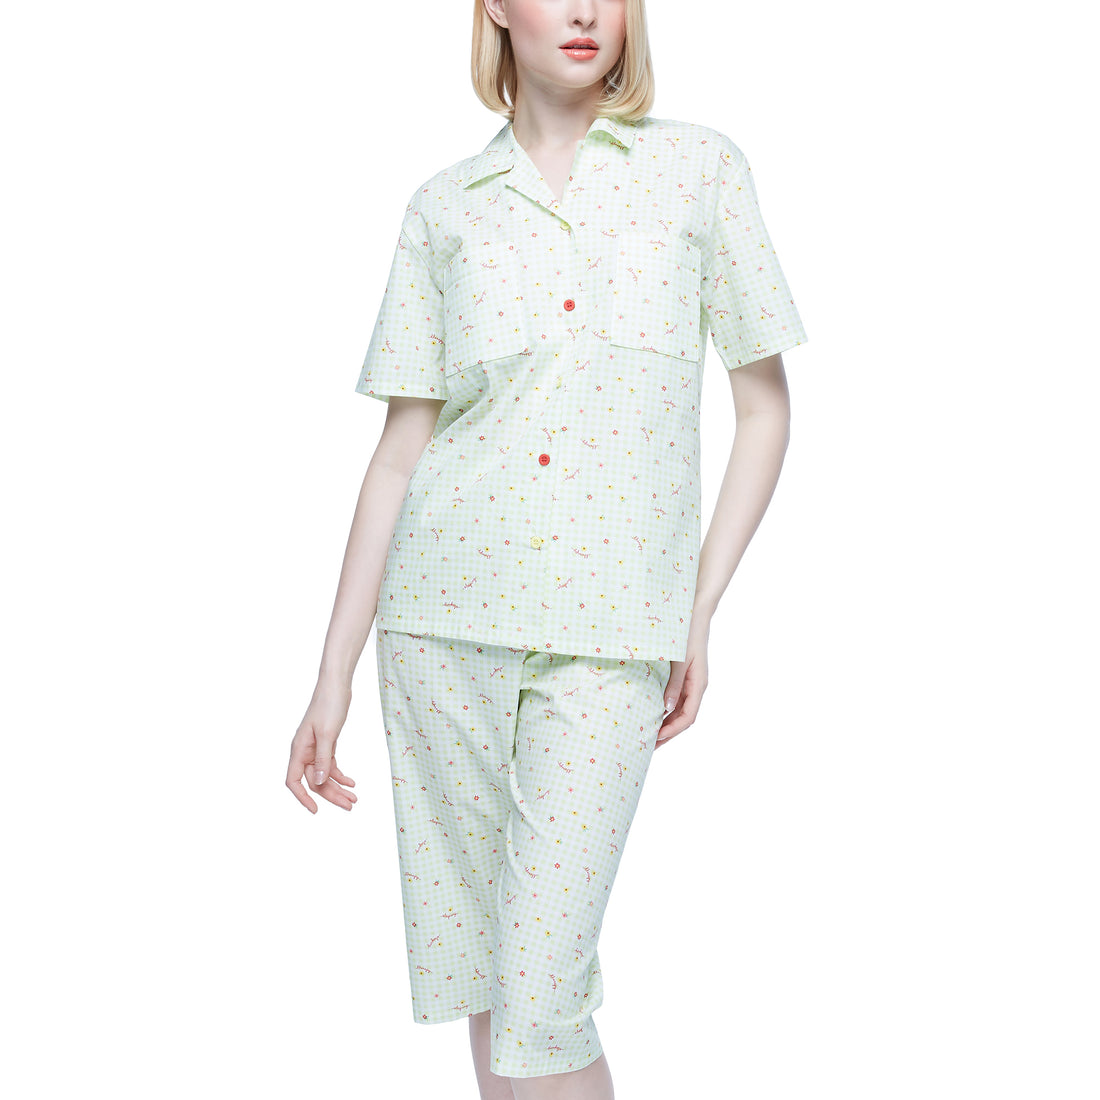 Wacoal Sleepwear ชุดนอนกันโป๊ พิมพ์ลายน่ารัก รุ่น WN9E02 สีเขียว (GR)